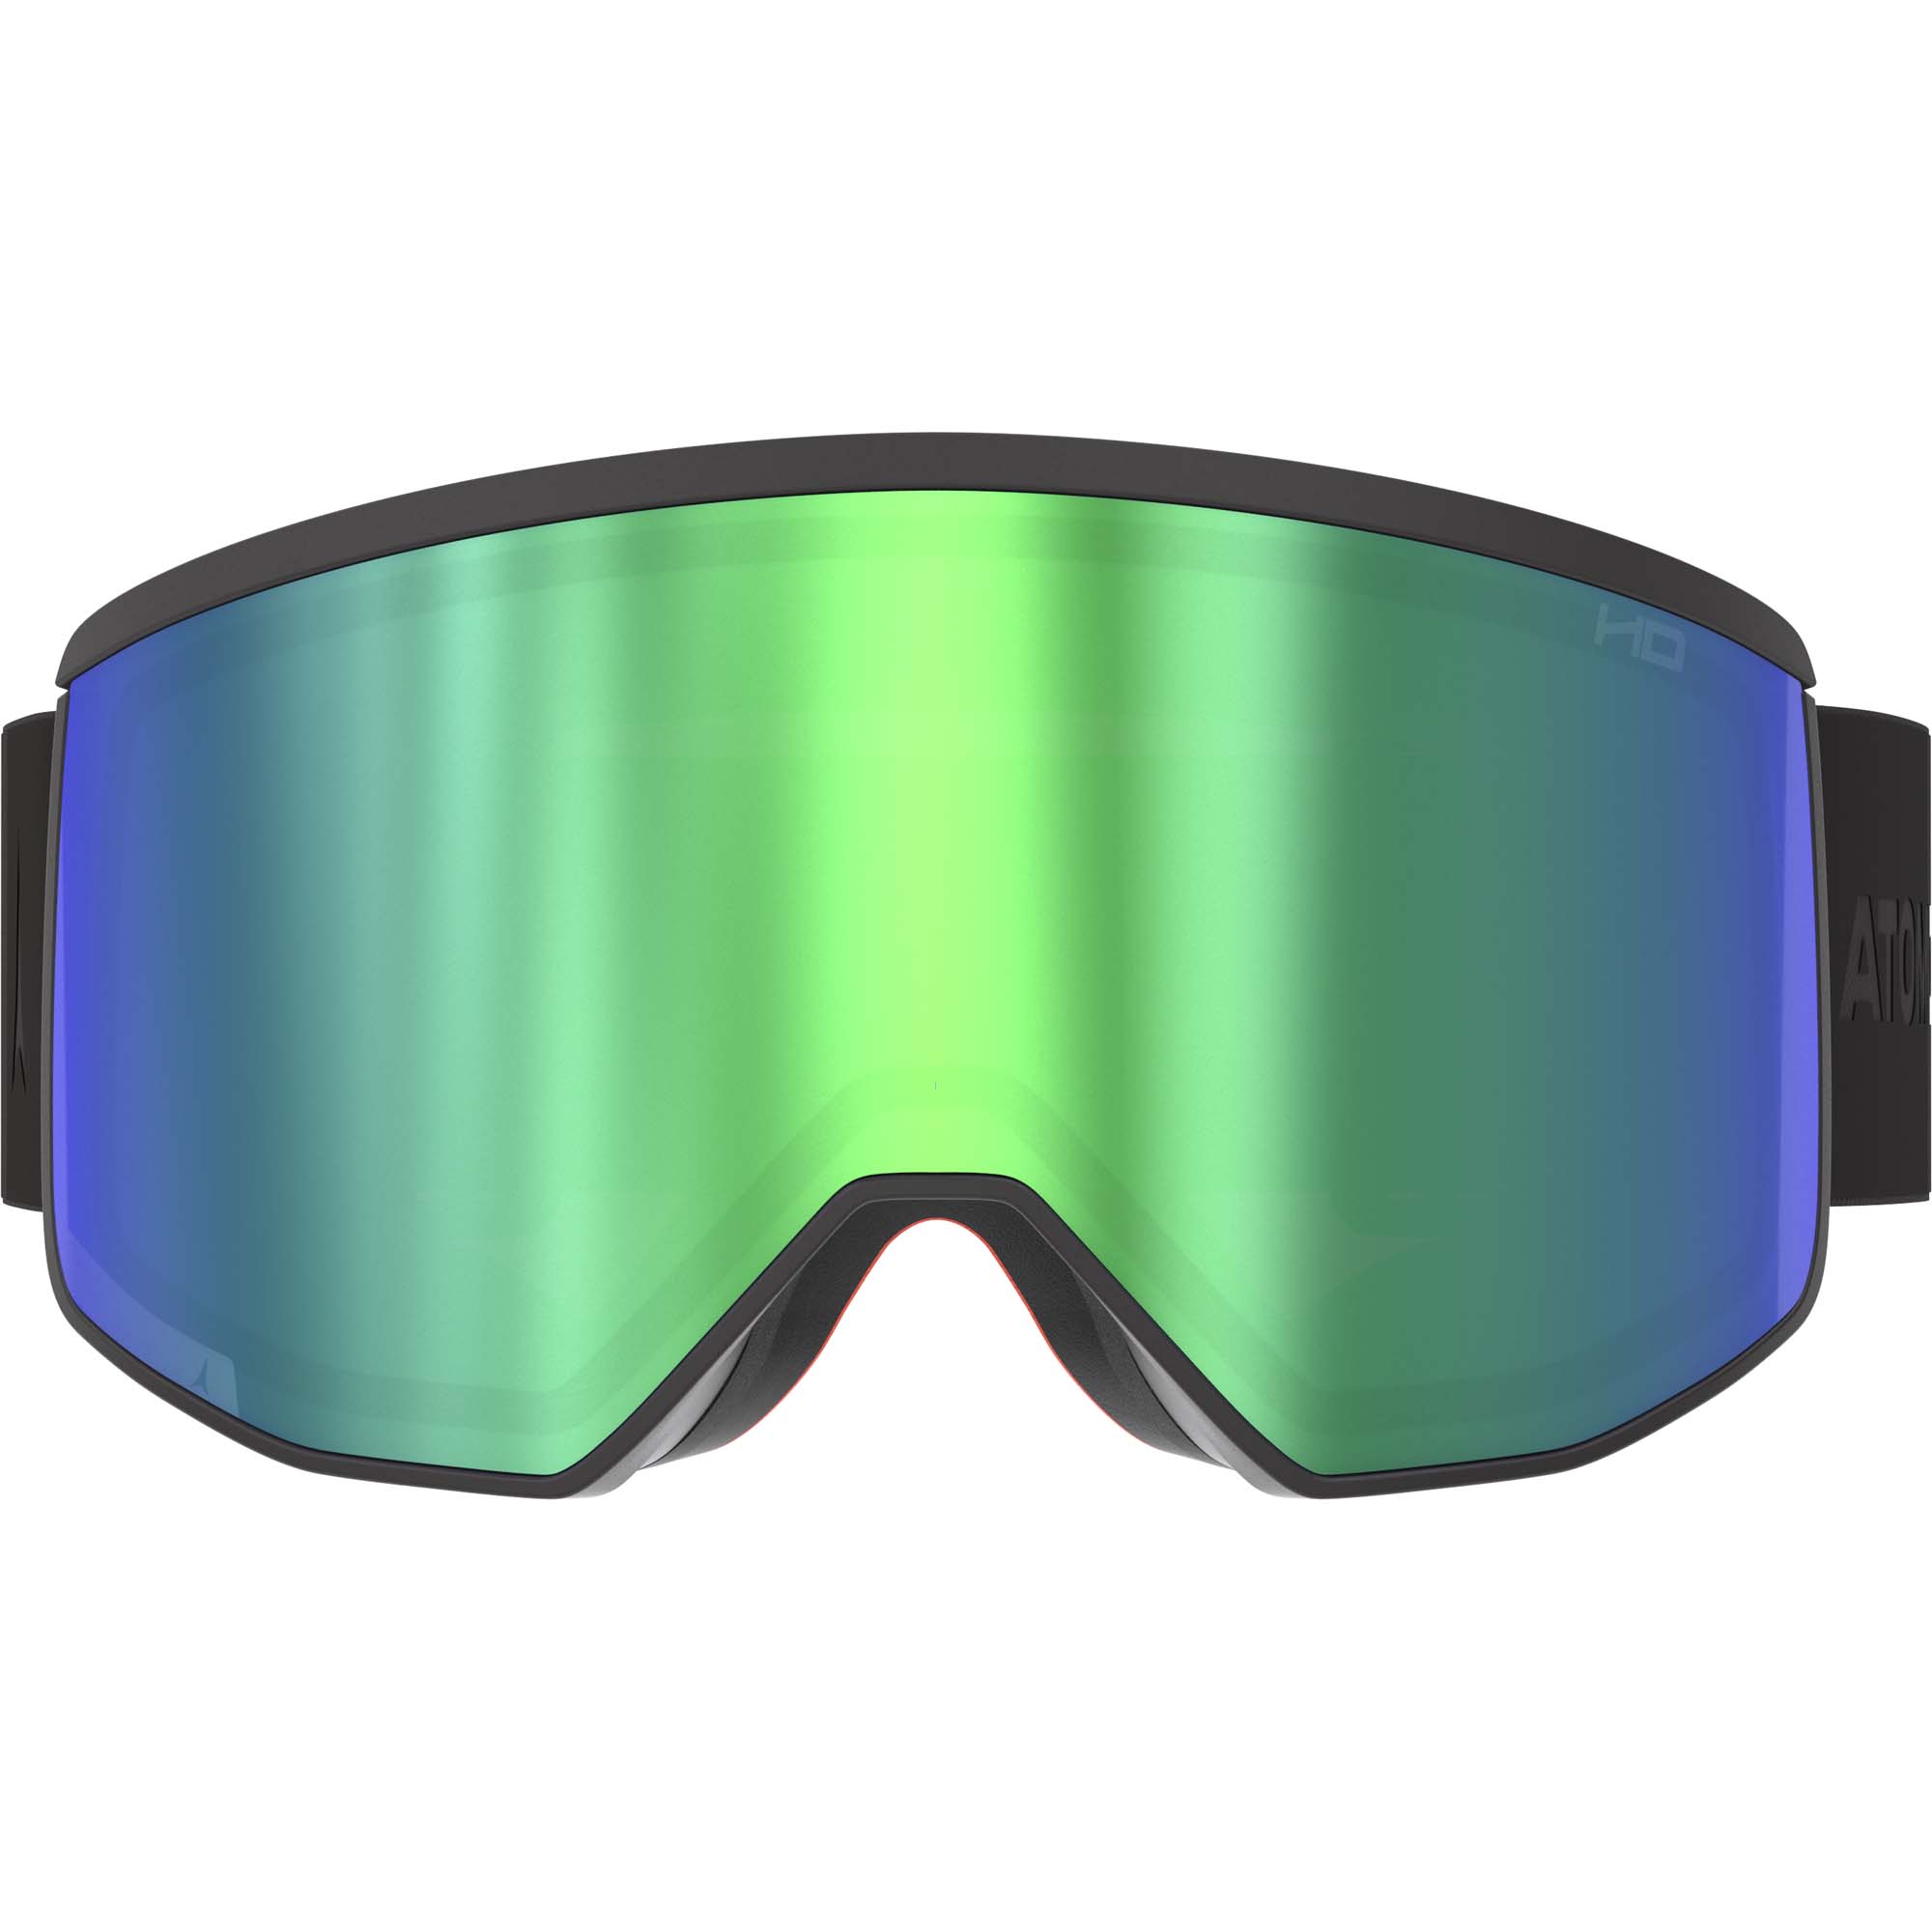 Atomic Four Pro HD Snowboard/Ski Goggles